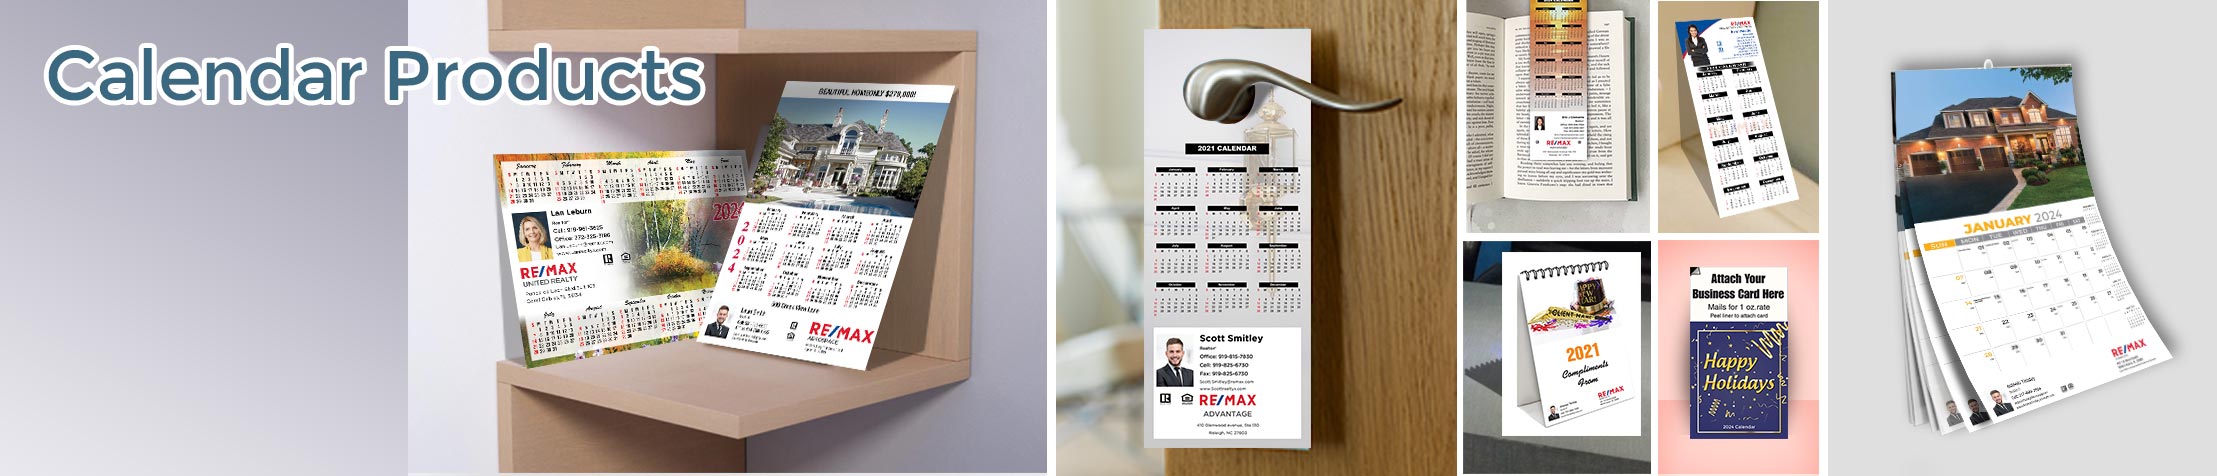 RE/MAX Real Estate Calendar Products - RE/MAX  2019 calendars, magnets, door hangers, bookmarks, tear away note pads | BestPrintBuy.com